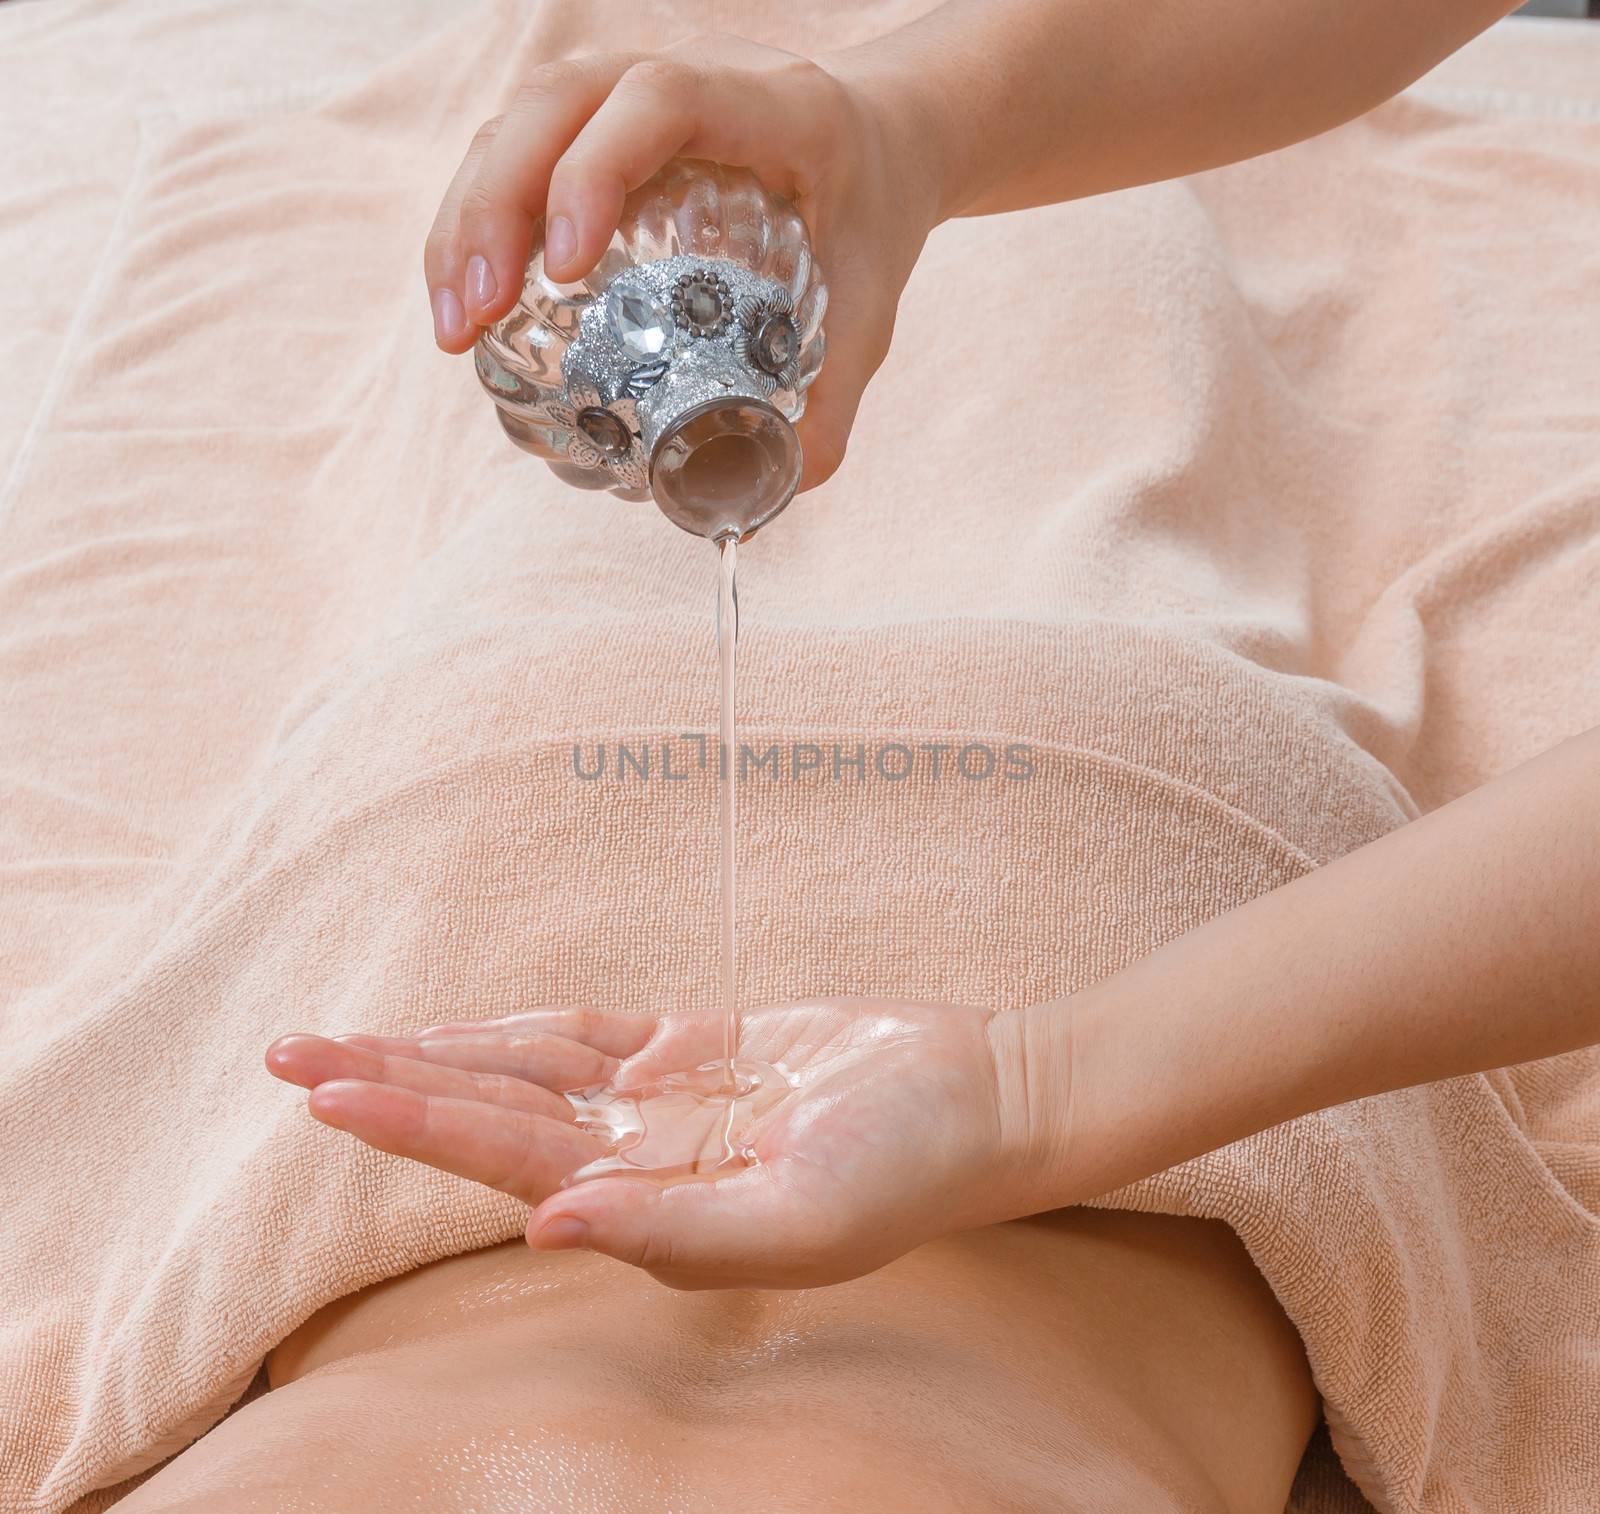 Aromatherapy oil massage in Thai spa